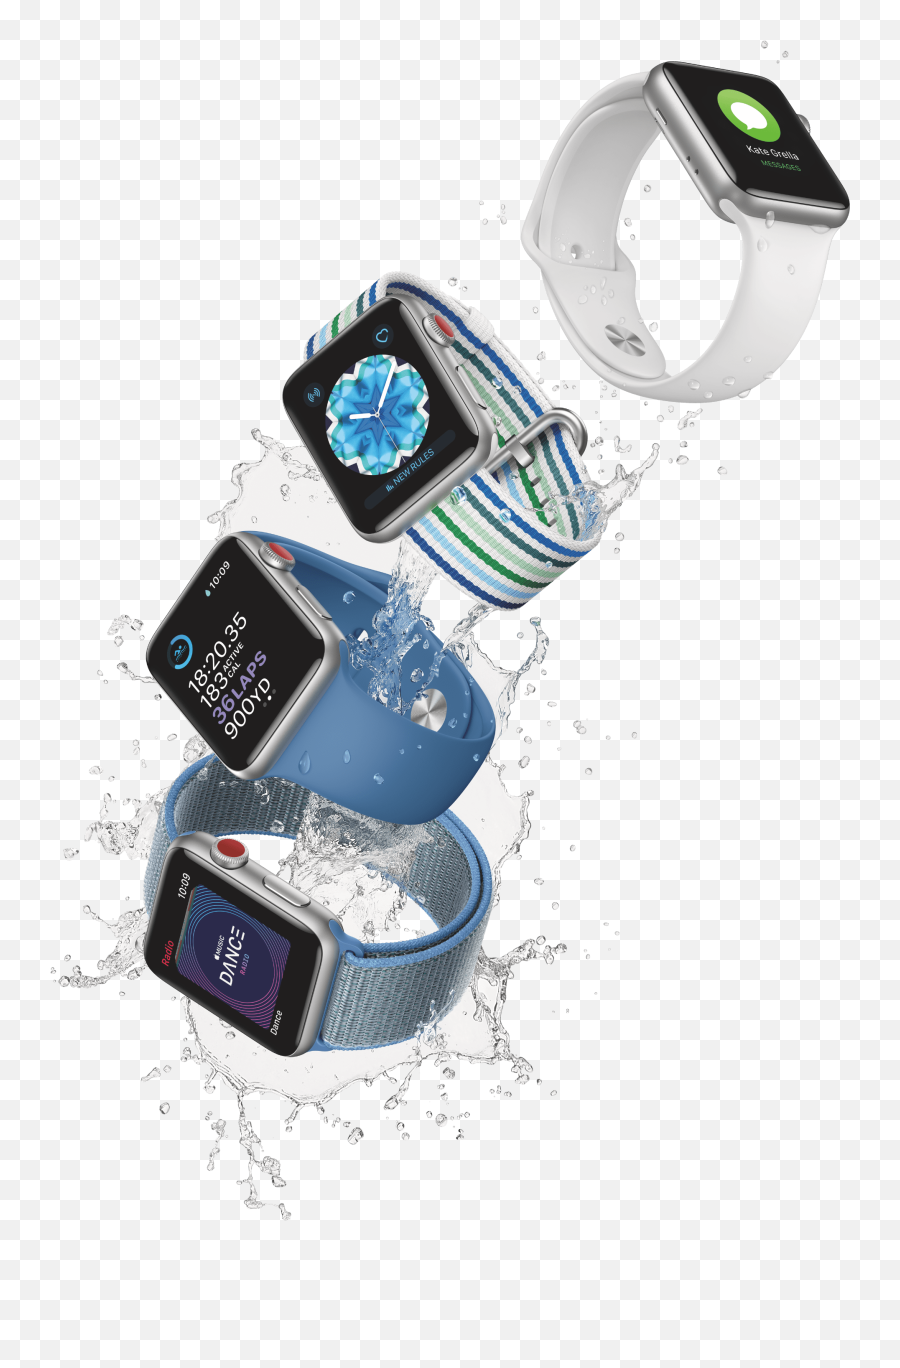 Apple Watch - Apple Watch Series 3 Cspire Png,Apple Watch Png